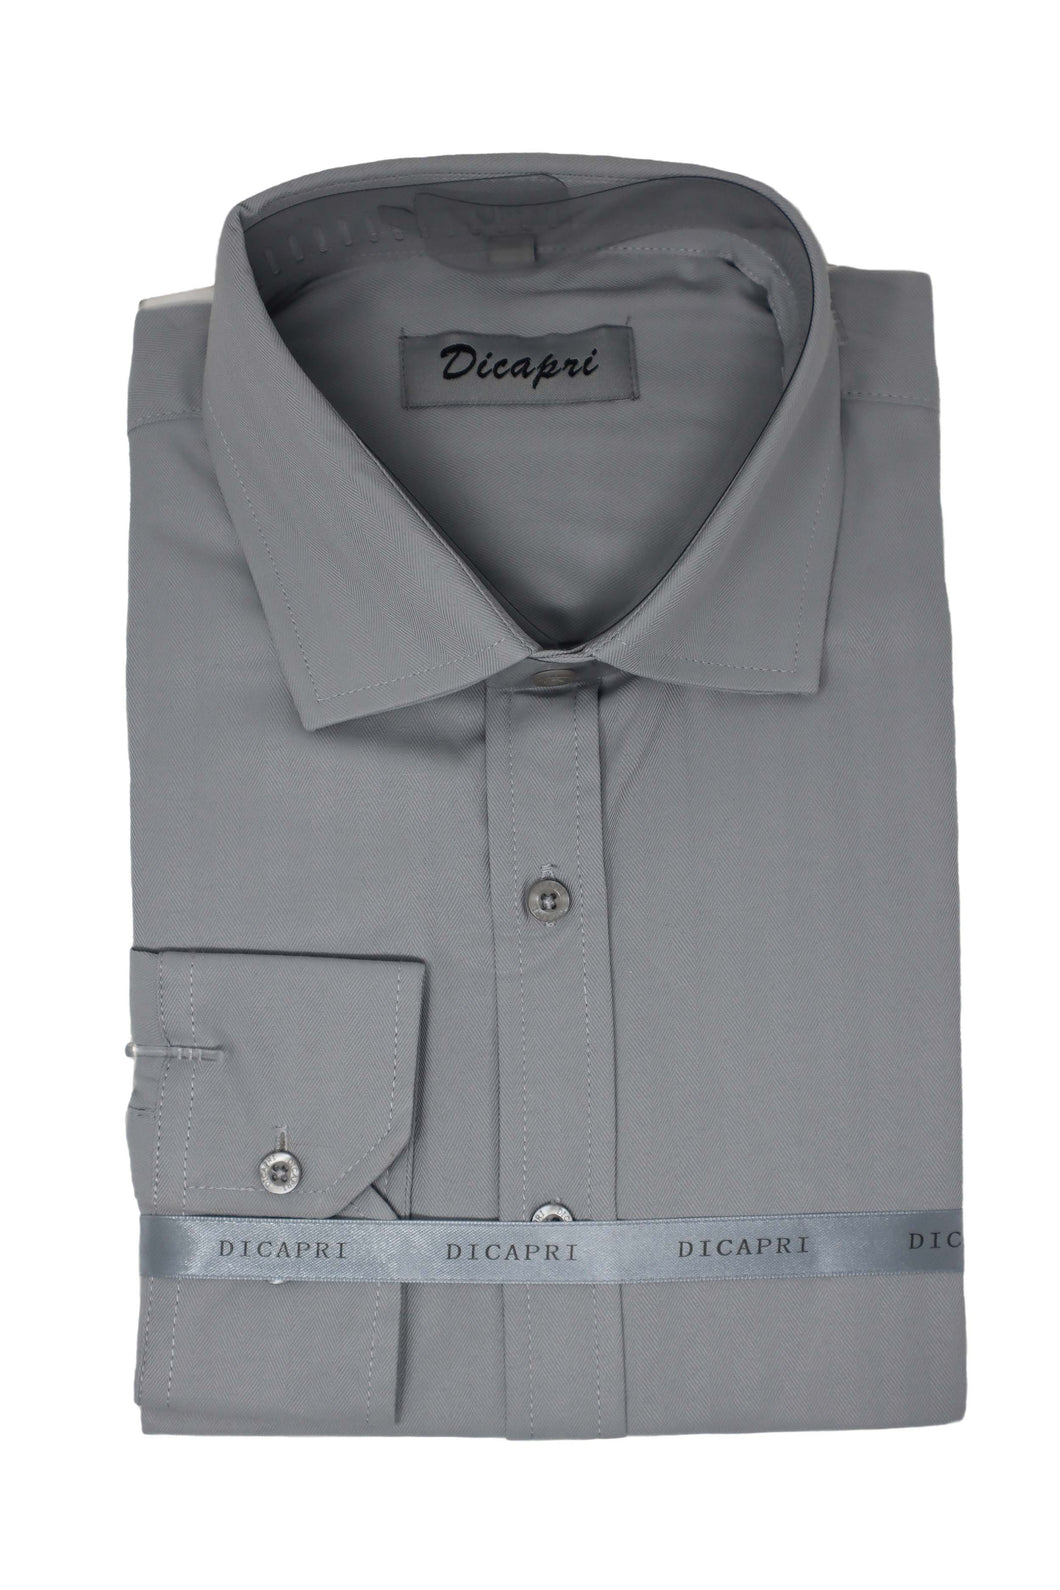 Men's | Dicapri | DS1803 | Dress Shirt |  Grey